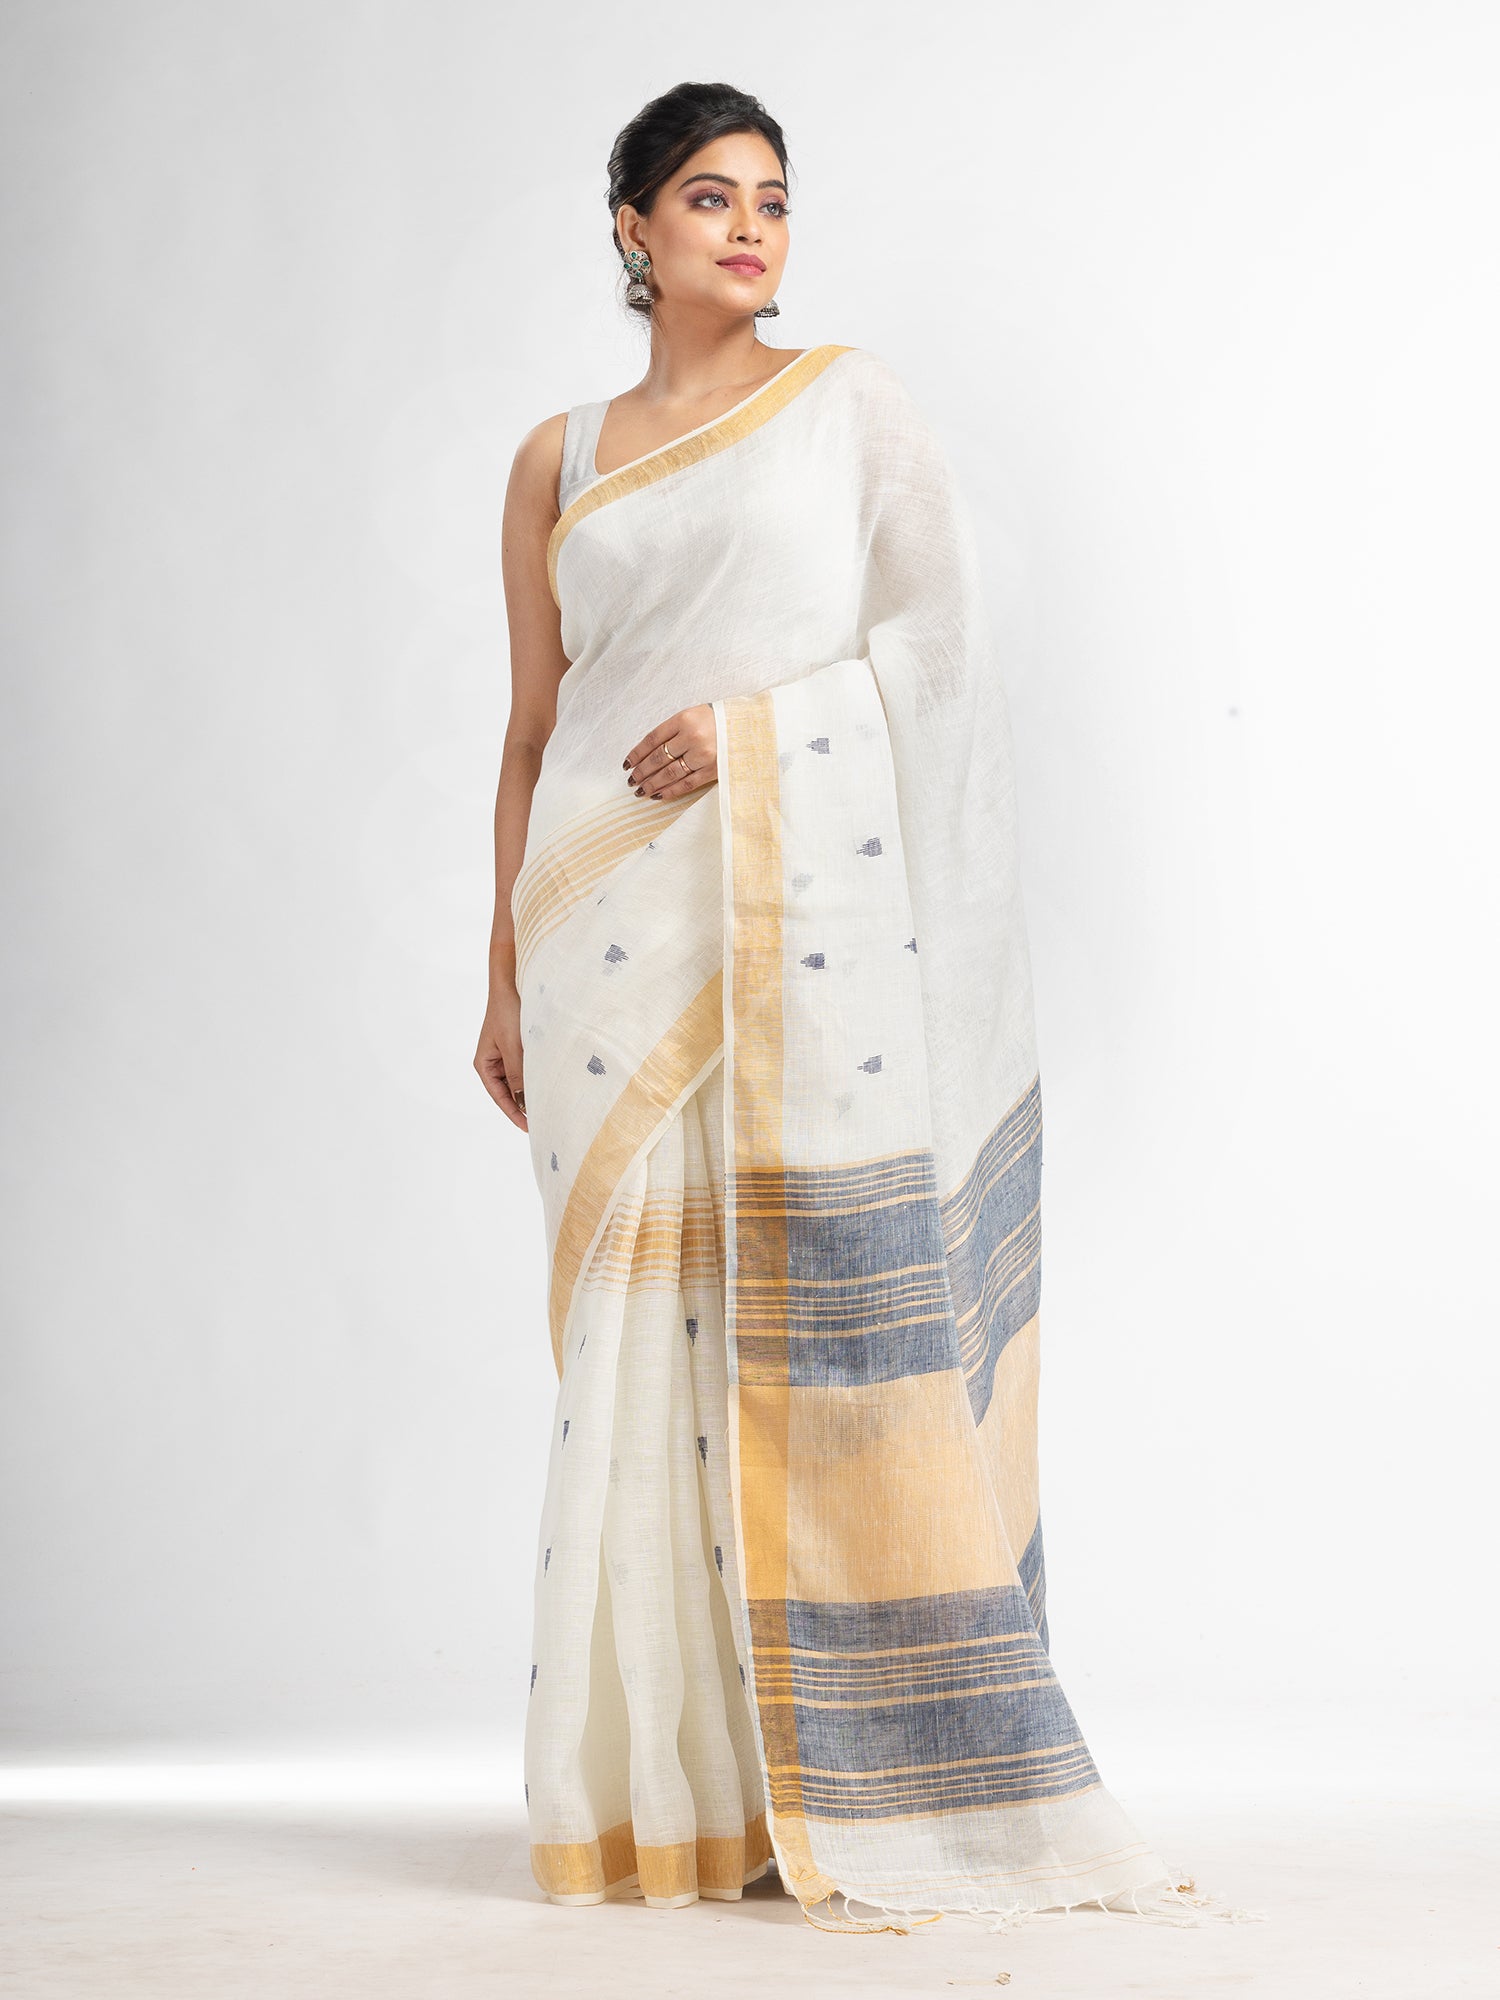 Women's white half body buti with gold zari and nevy blue pallu in gold zari border handwoven linen saree - Angoshobha